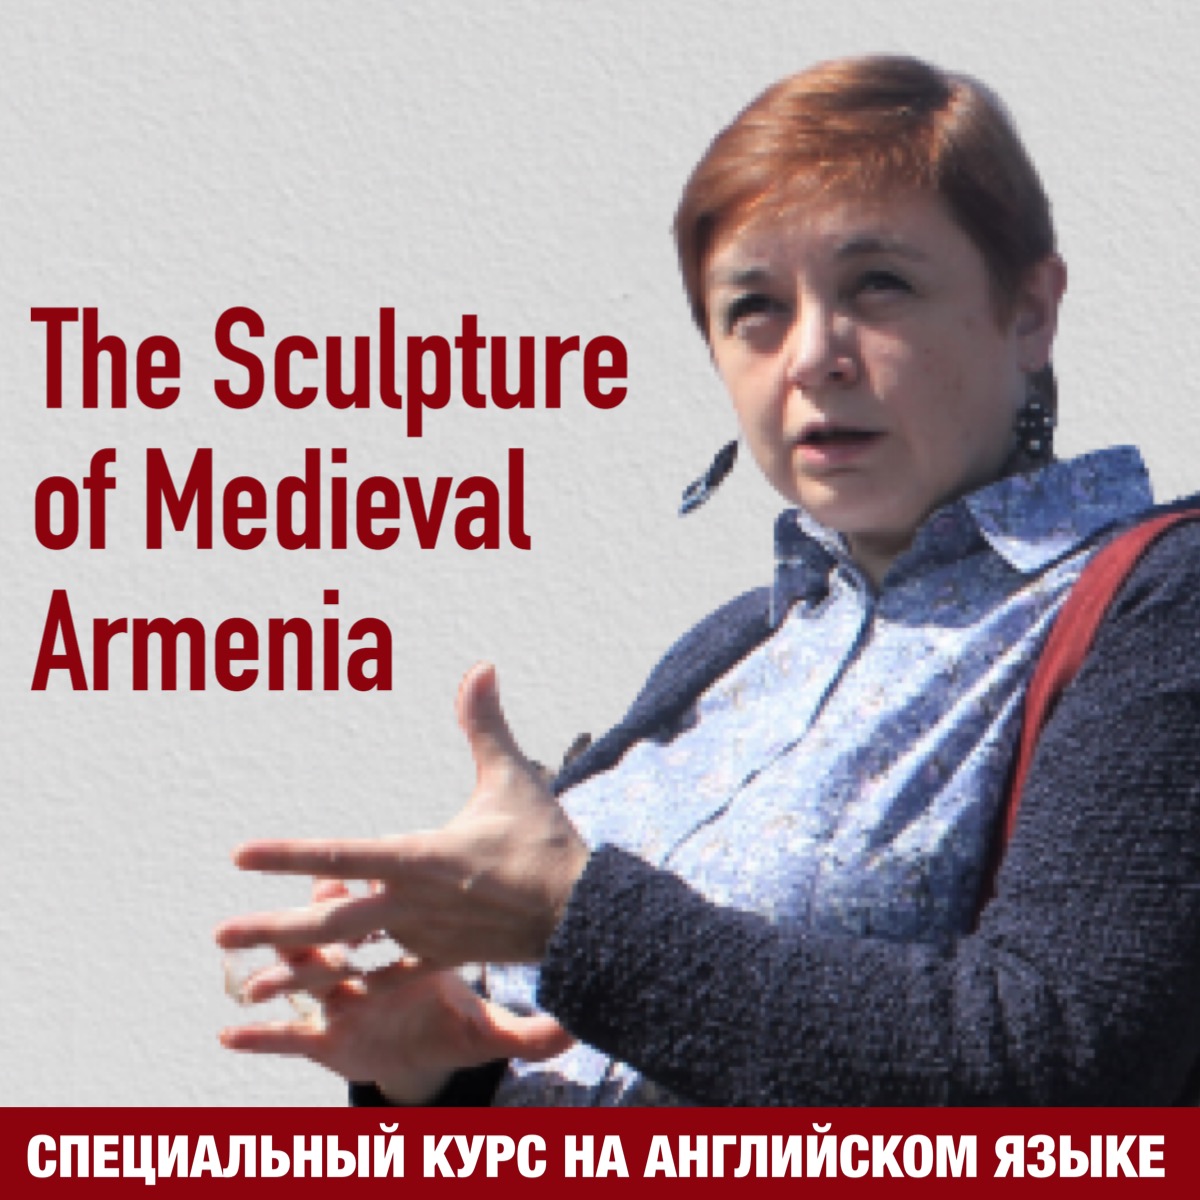 Специальный курс "Армянская монументальная скульптура V-XIV веков" (на англ. яз.)